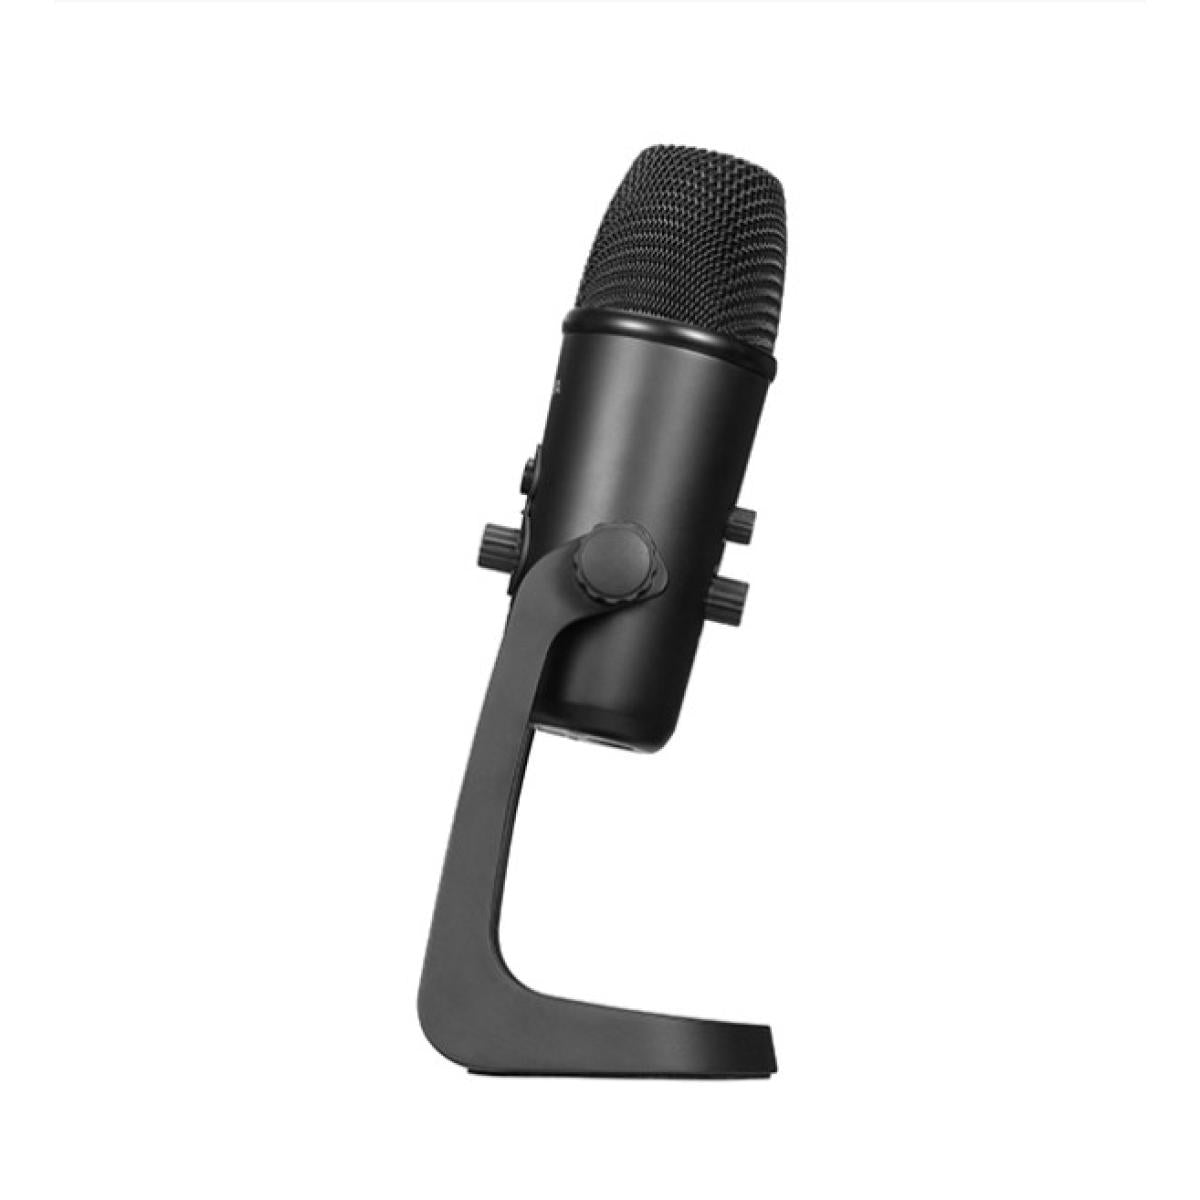 BOYA USB Condenser Microphone - Black